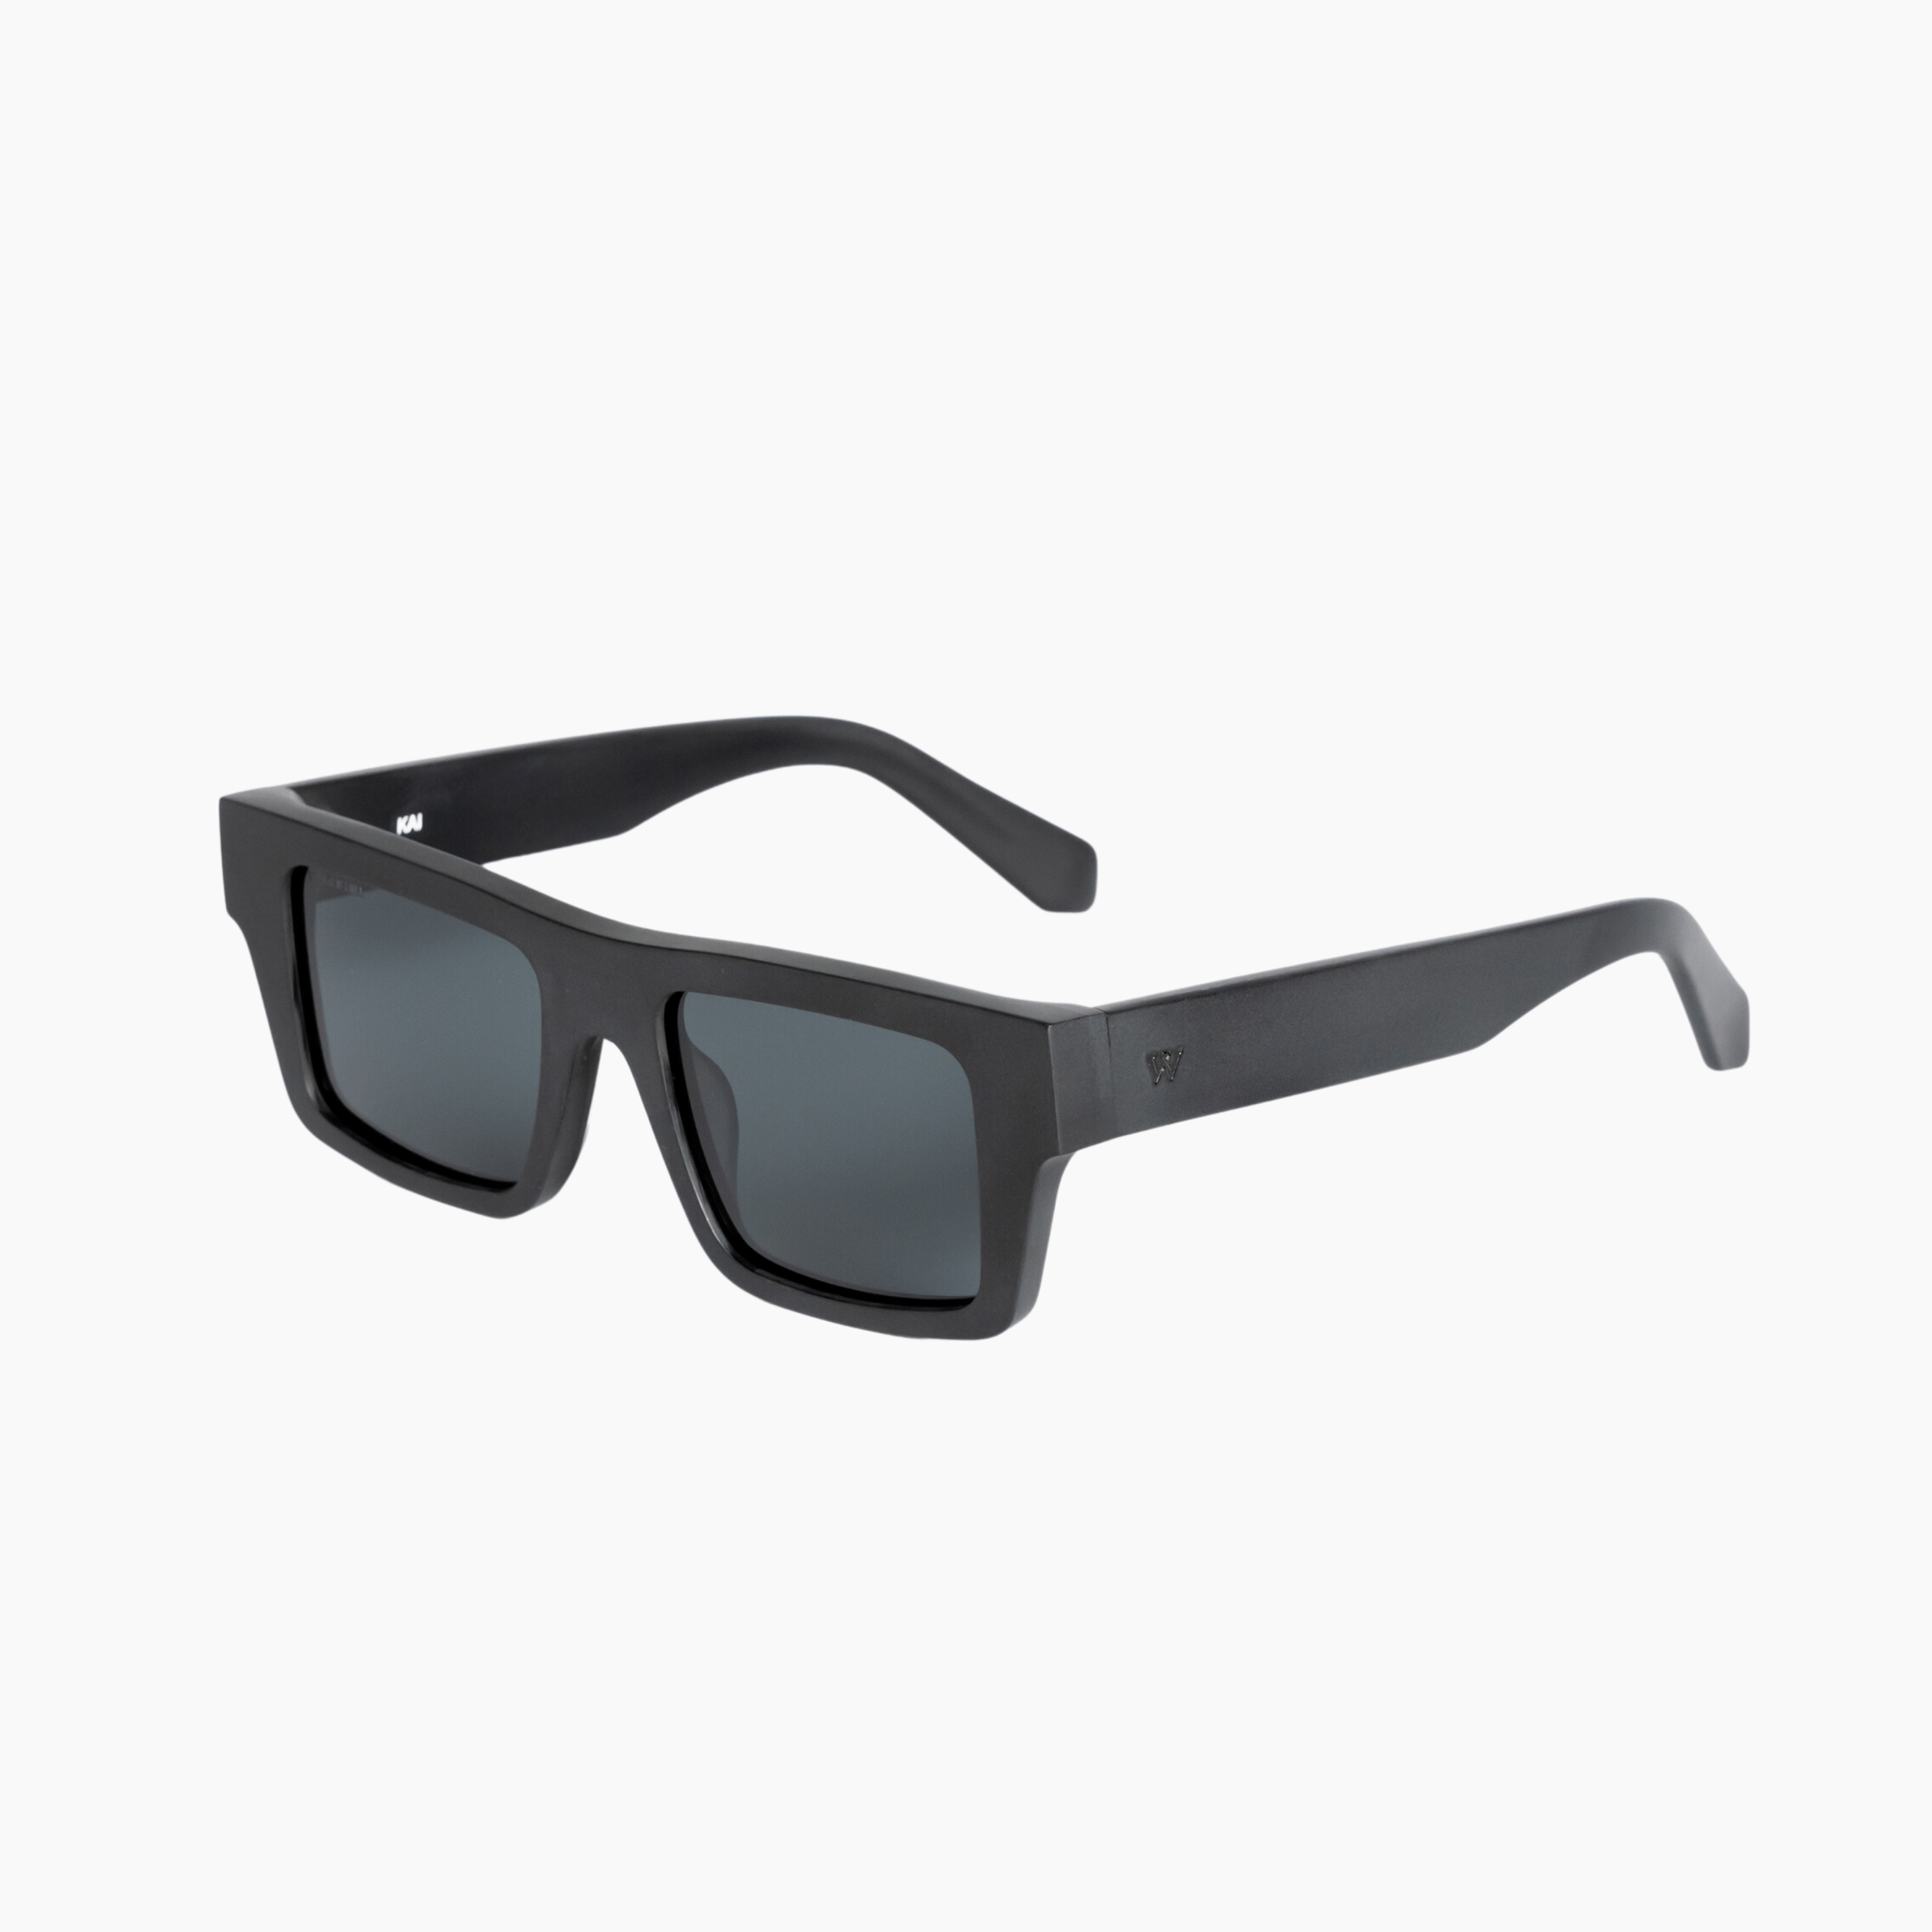 Walter Hill Sunglasses Oversized / Tortoise / Polarized Cat.3 KAI - Matte Black